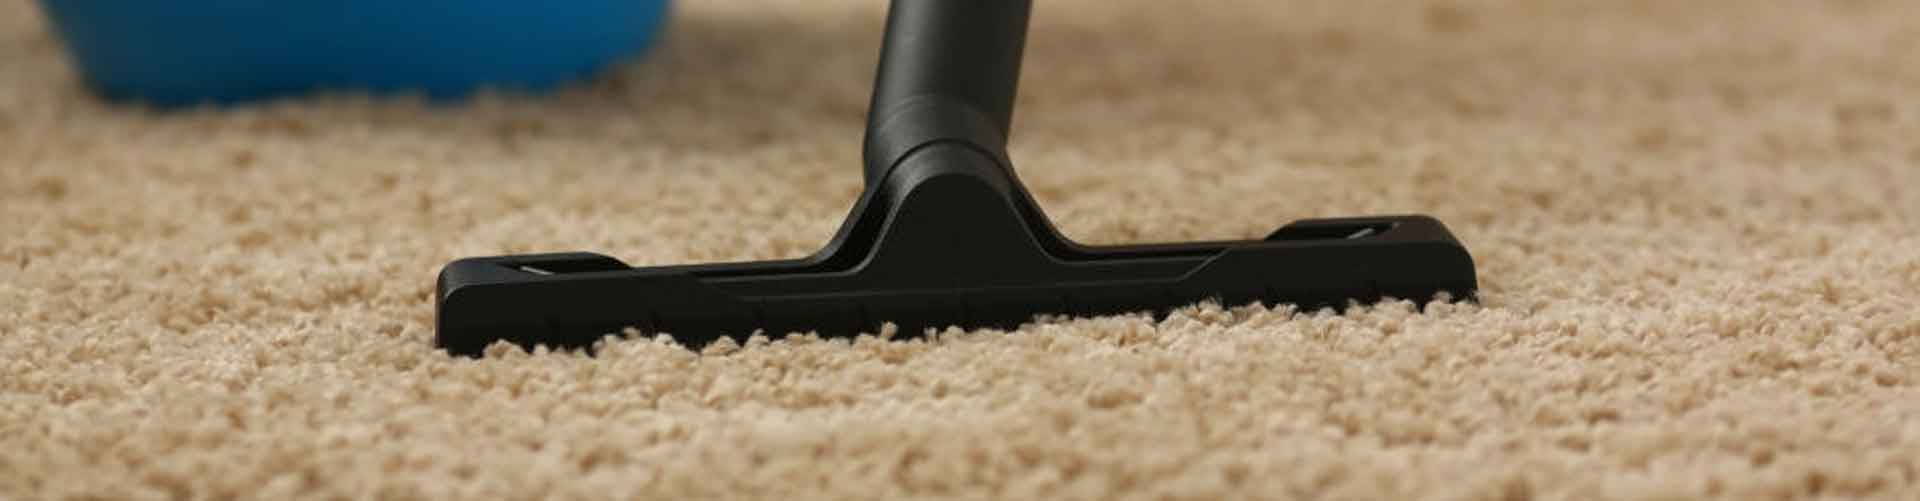 best carpet cleaner machine in oklahoma